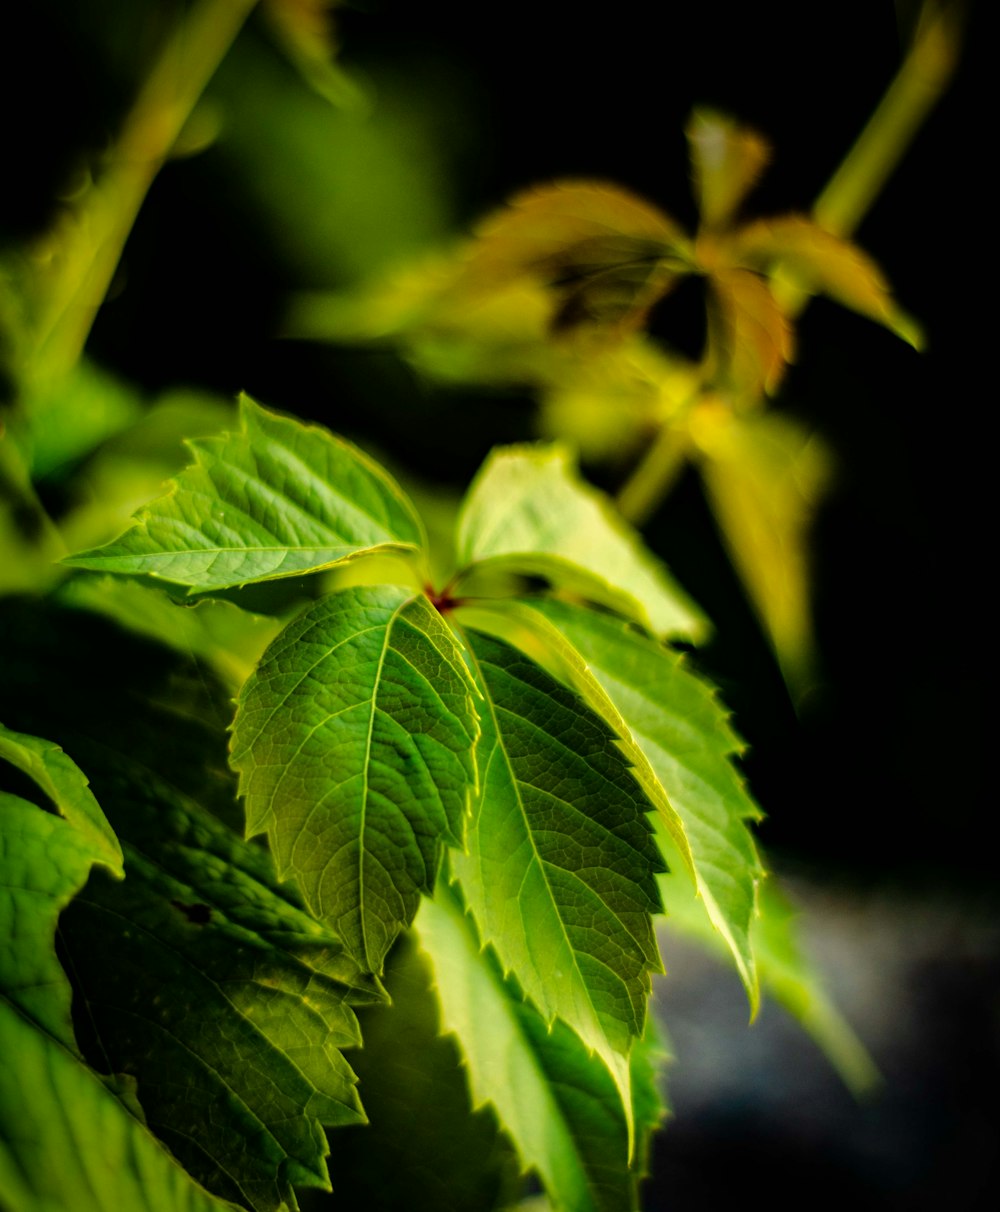 foglie verdi e gialle nella fotografia ravvicinata